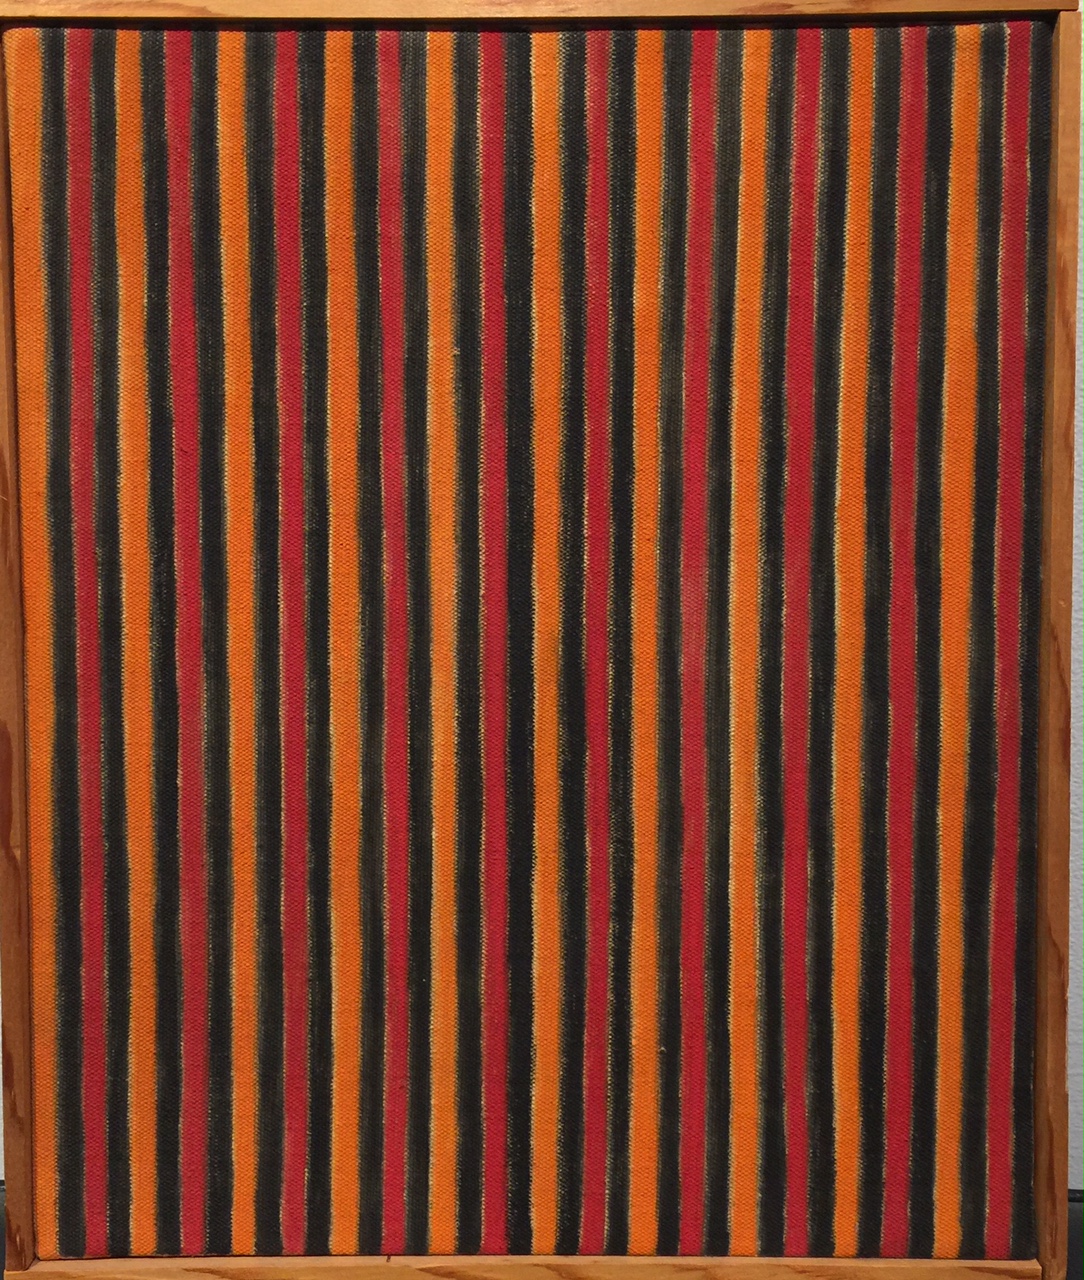 Gene Davis, ‘Black-Red-Orange,’ 1958, oil on canvas, 12 1/4 × 10 inches. Estimate: $25,000-$35,000. Carlyle Galleries International image